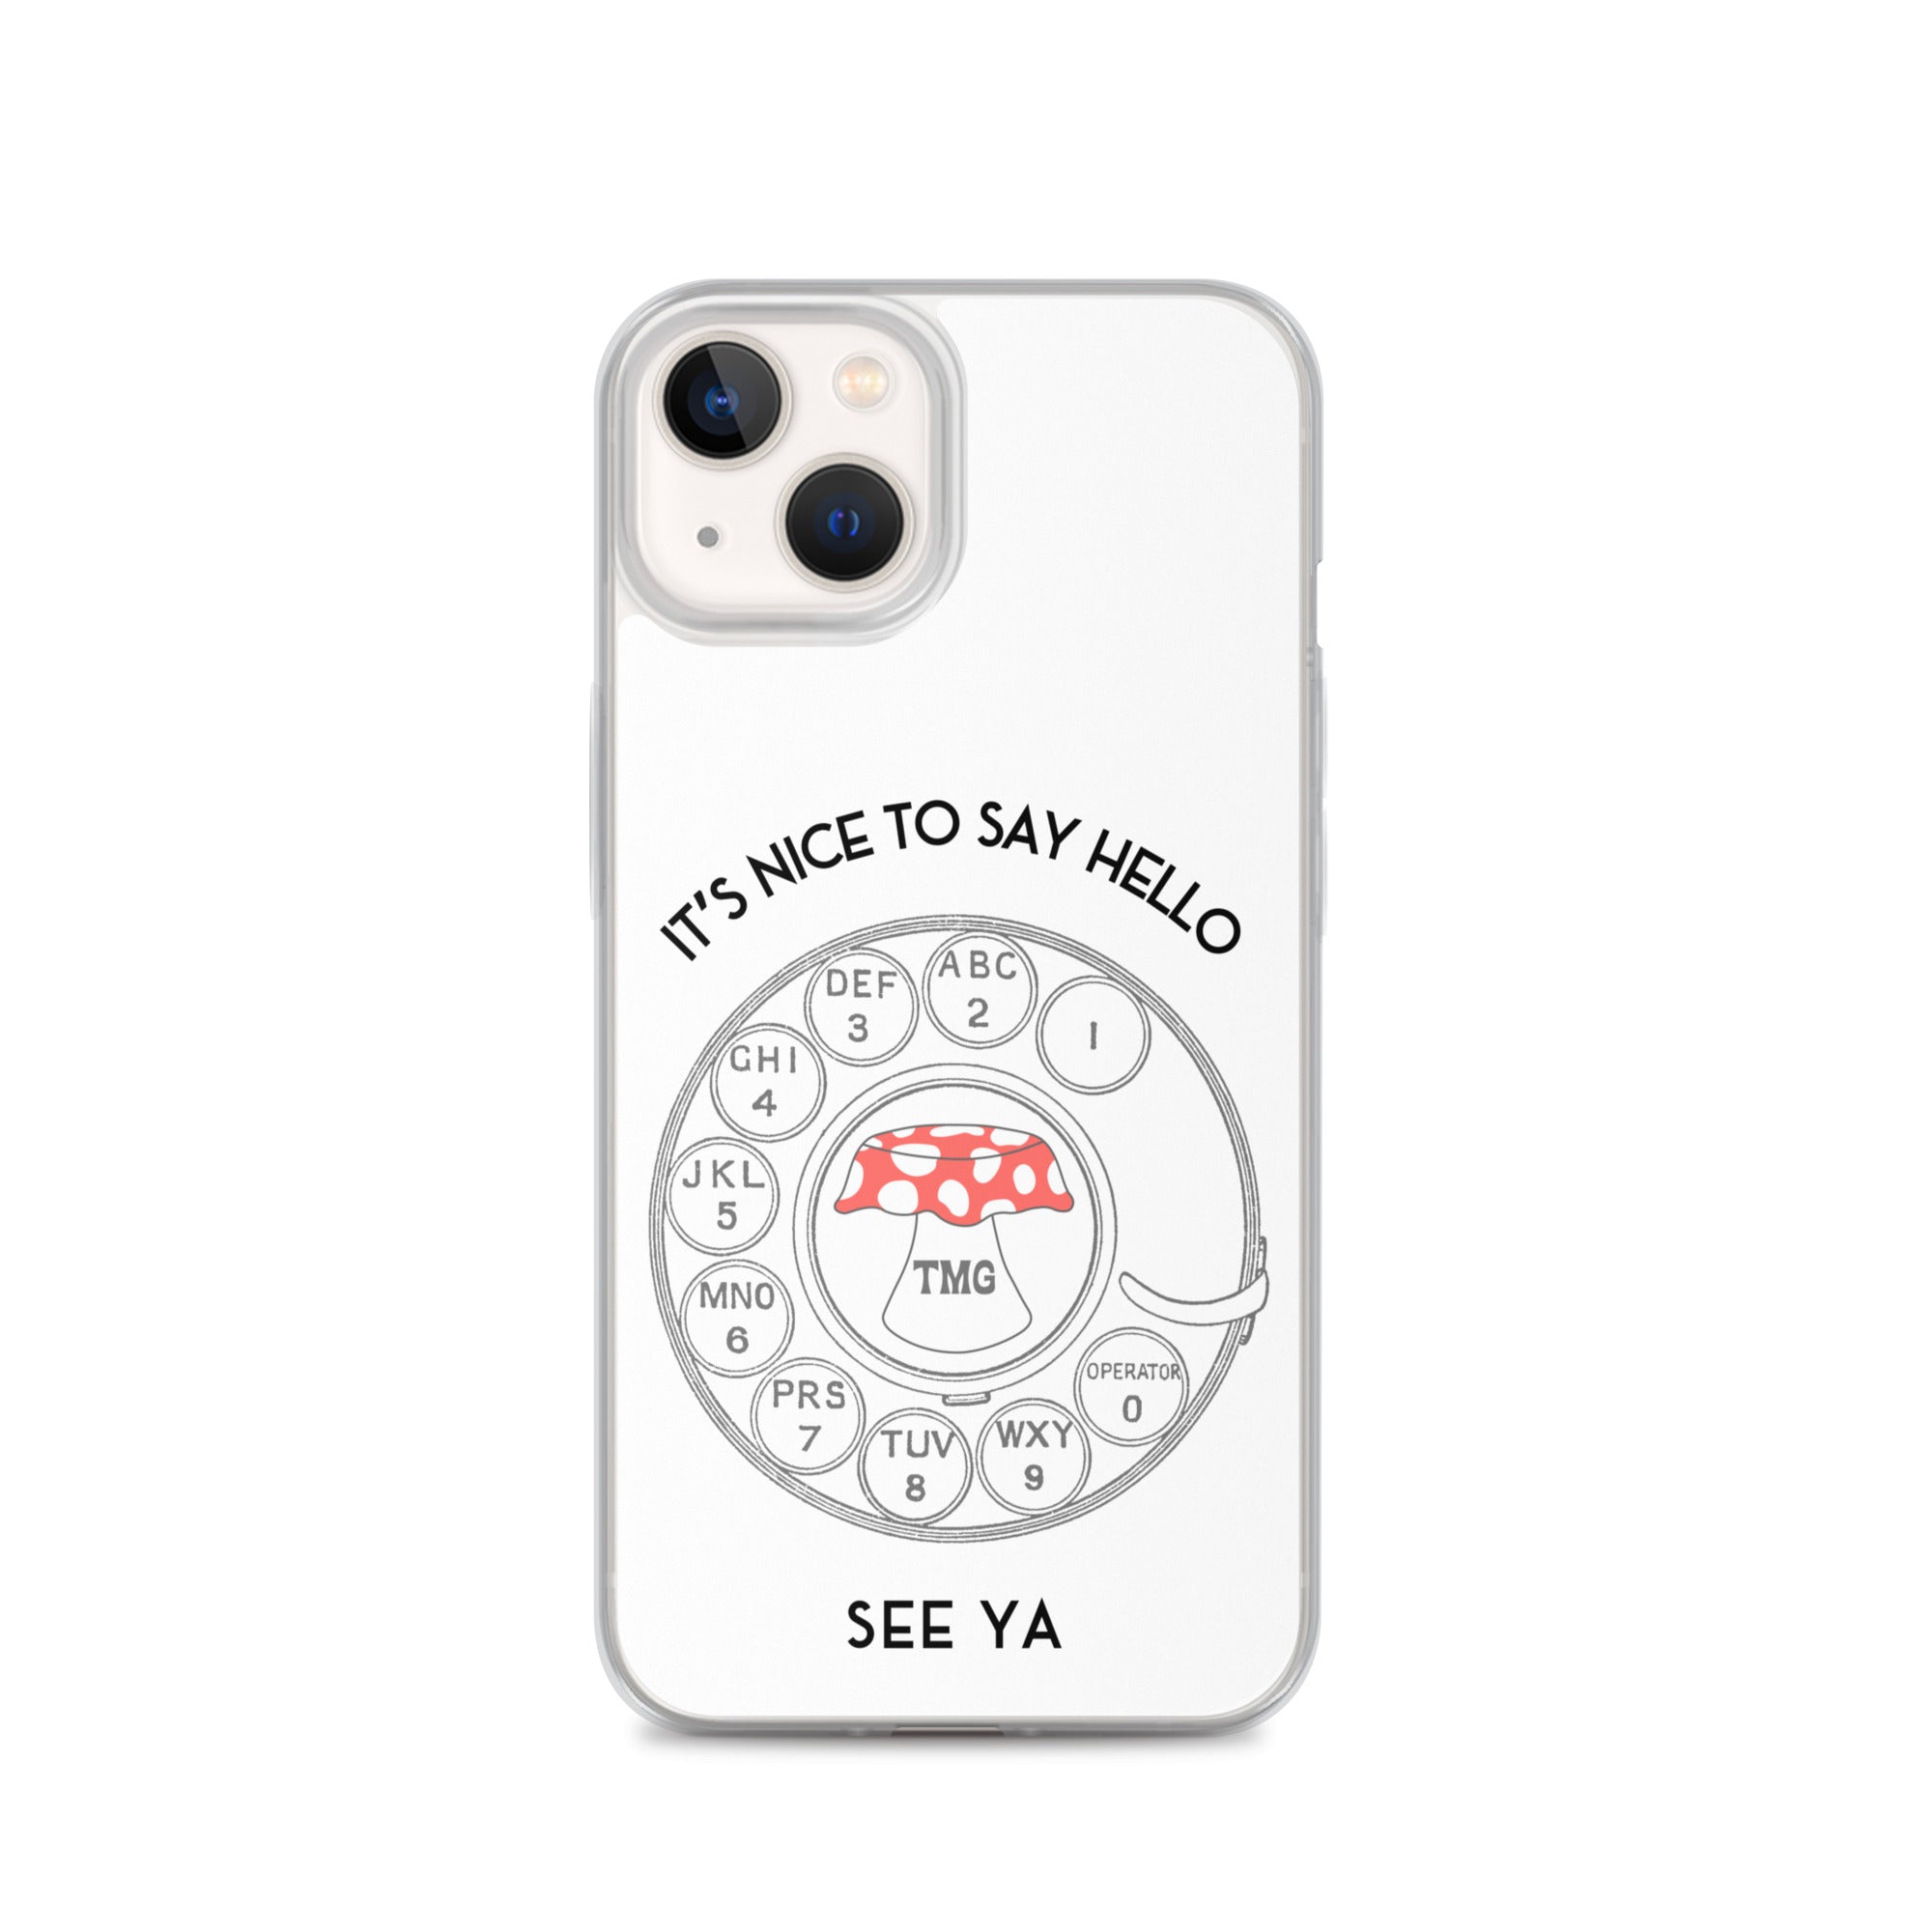 TMG Rotary iPhone Cover, White